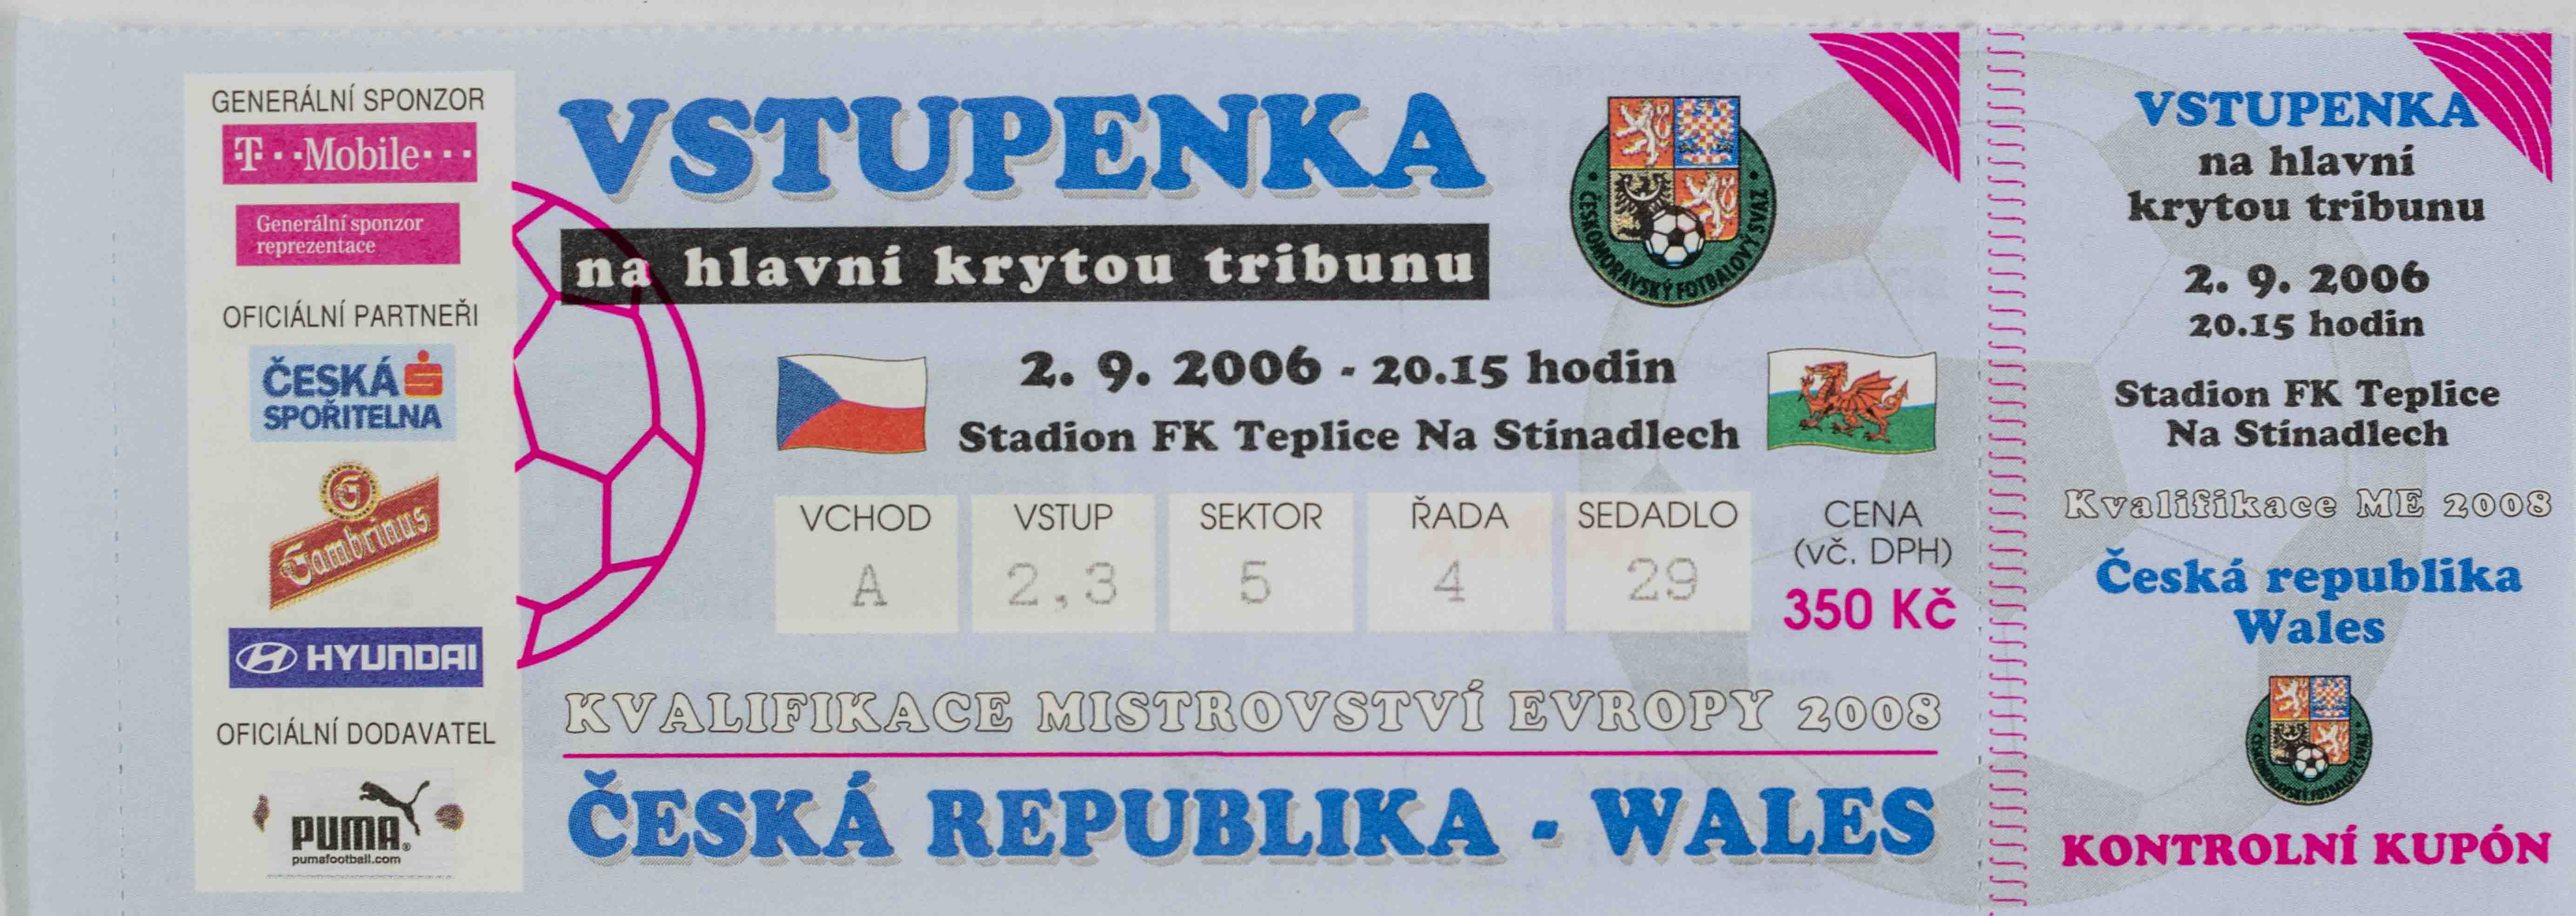 Vstupenka fotbal Česká rep. v. Wales, Q ME, 2006 2